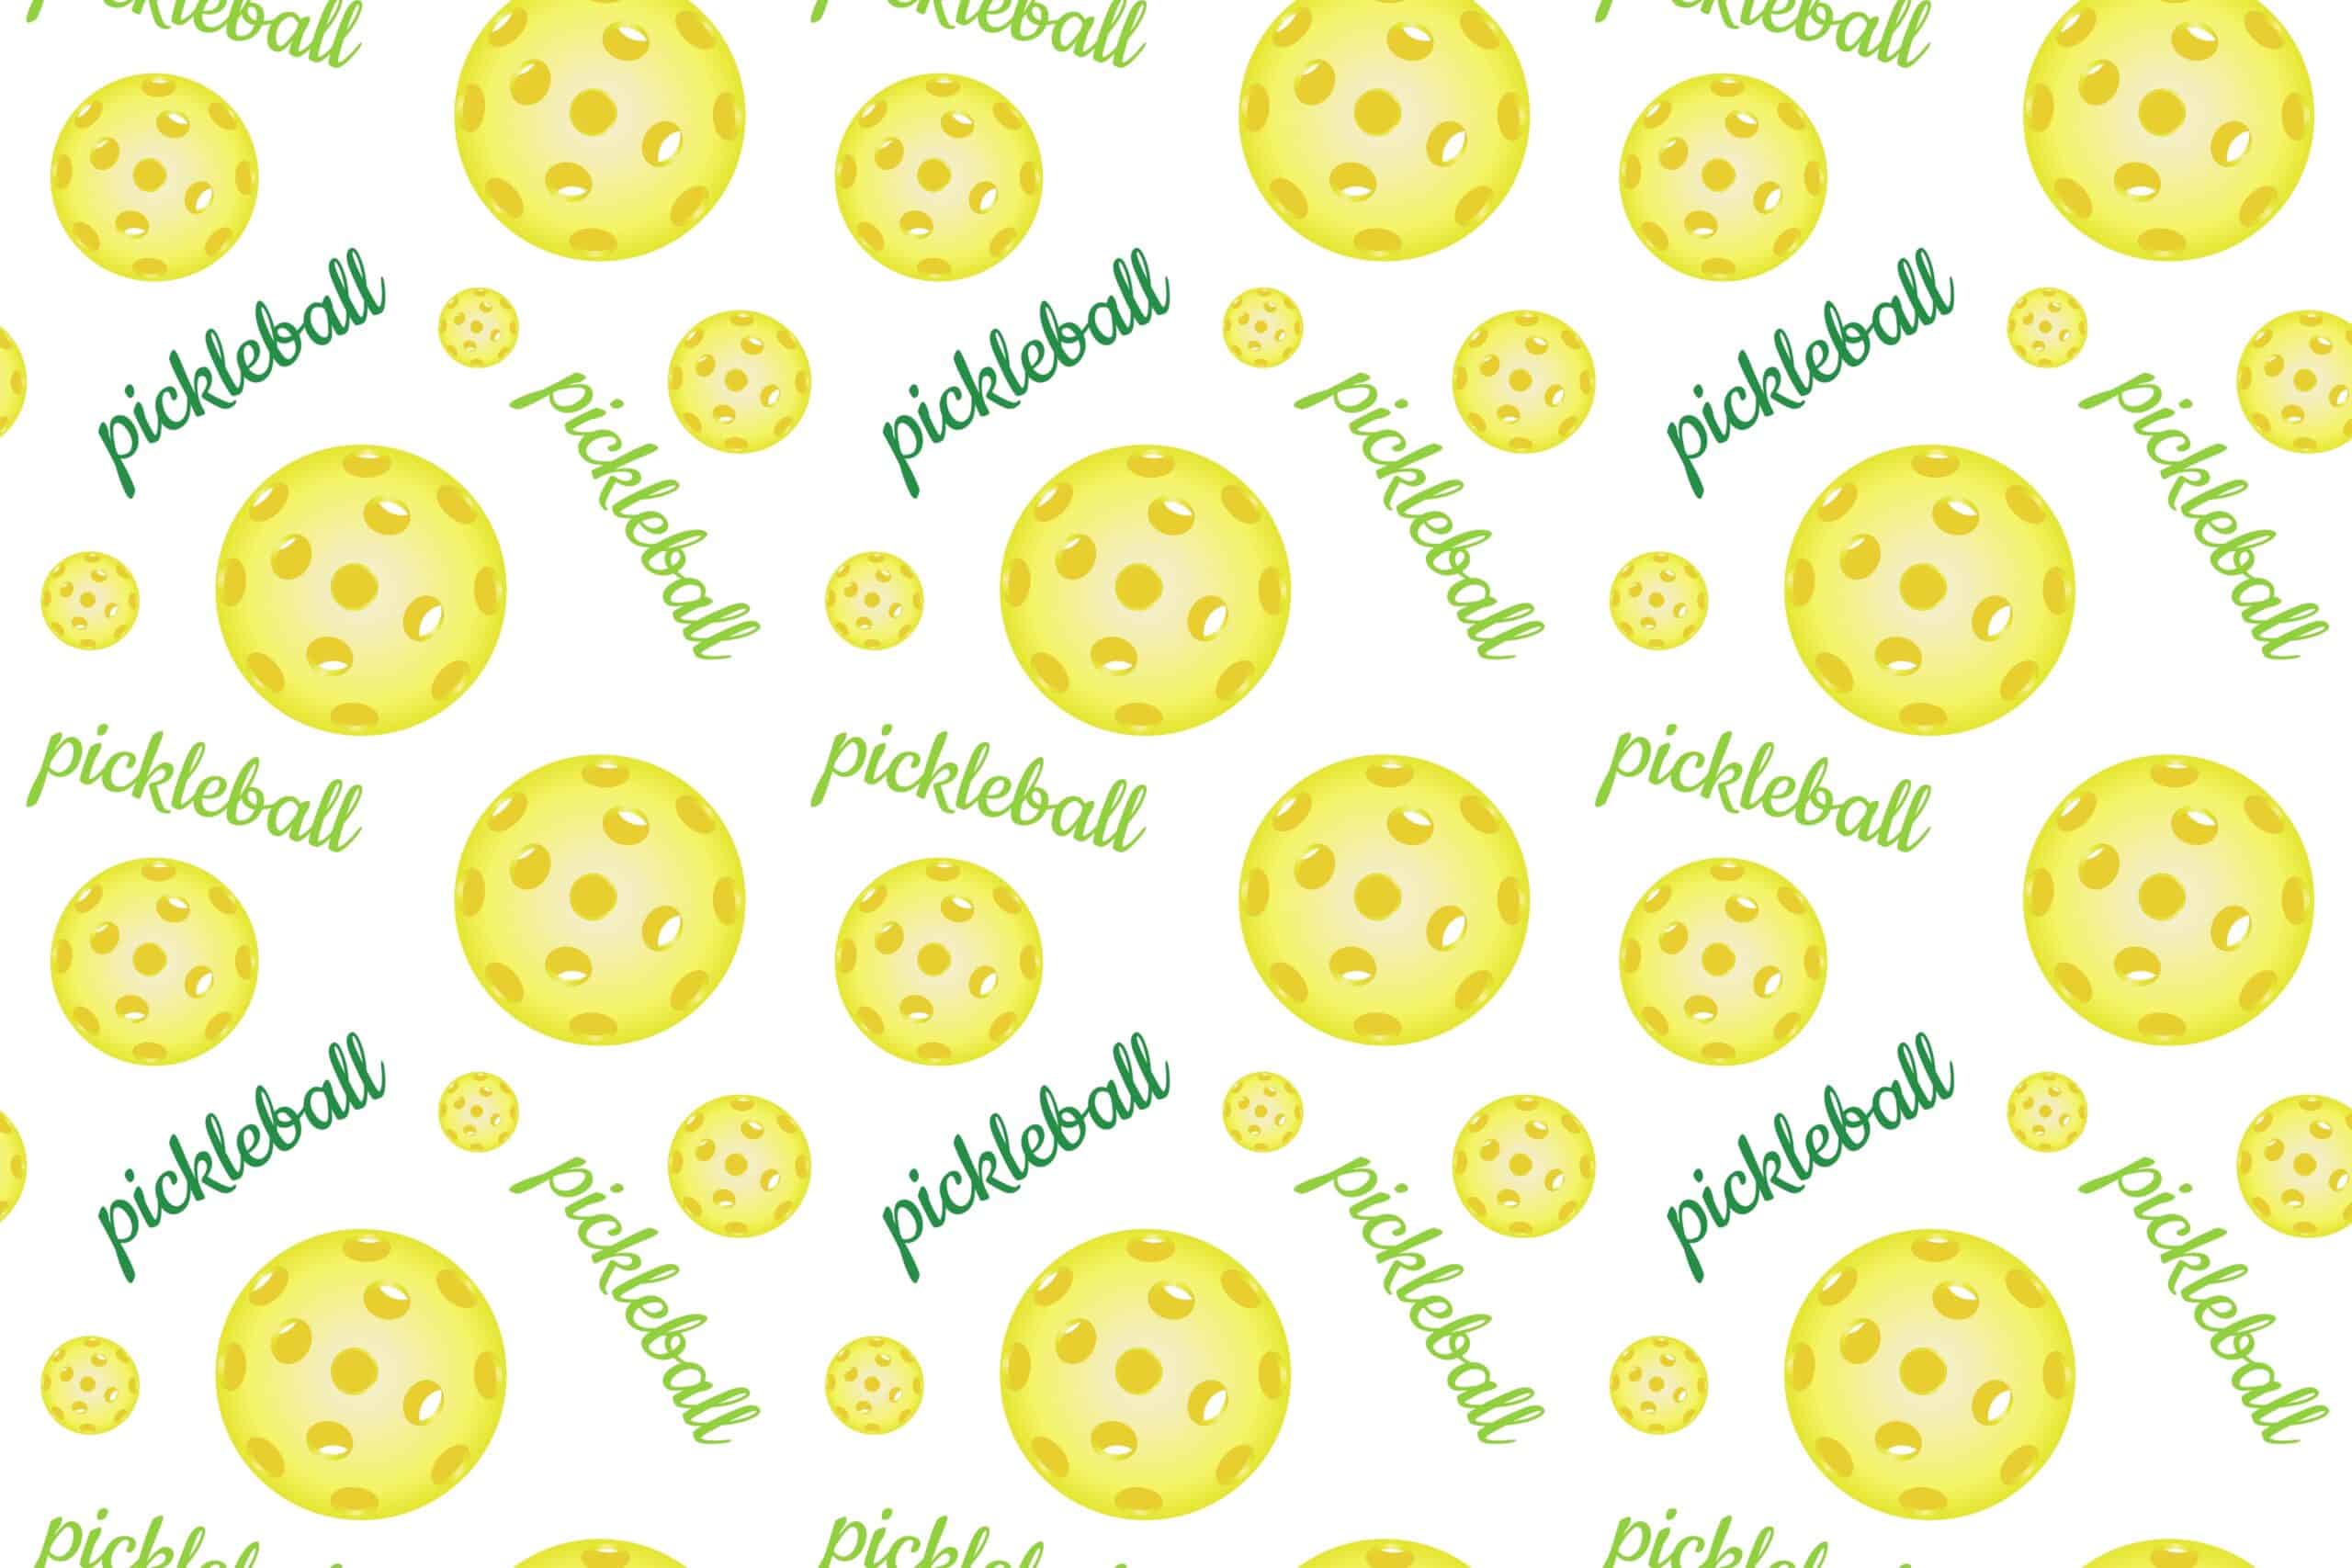 Pickle Balls